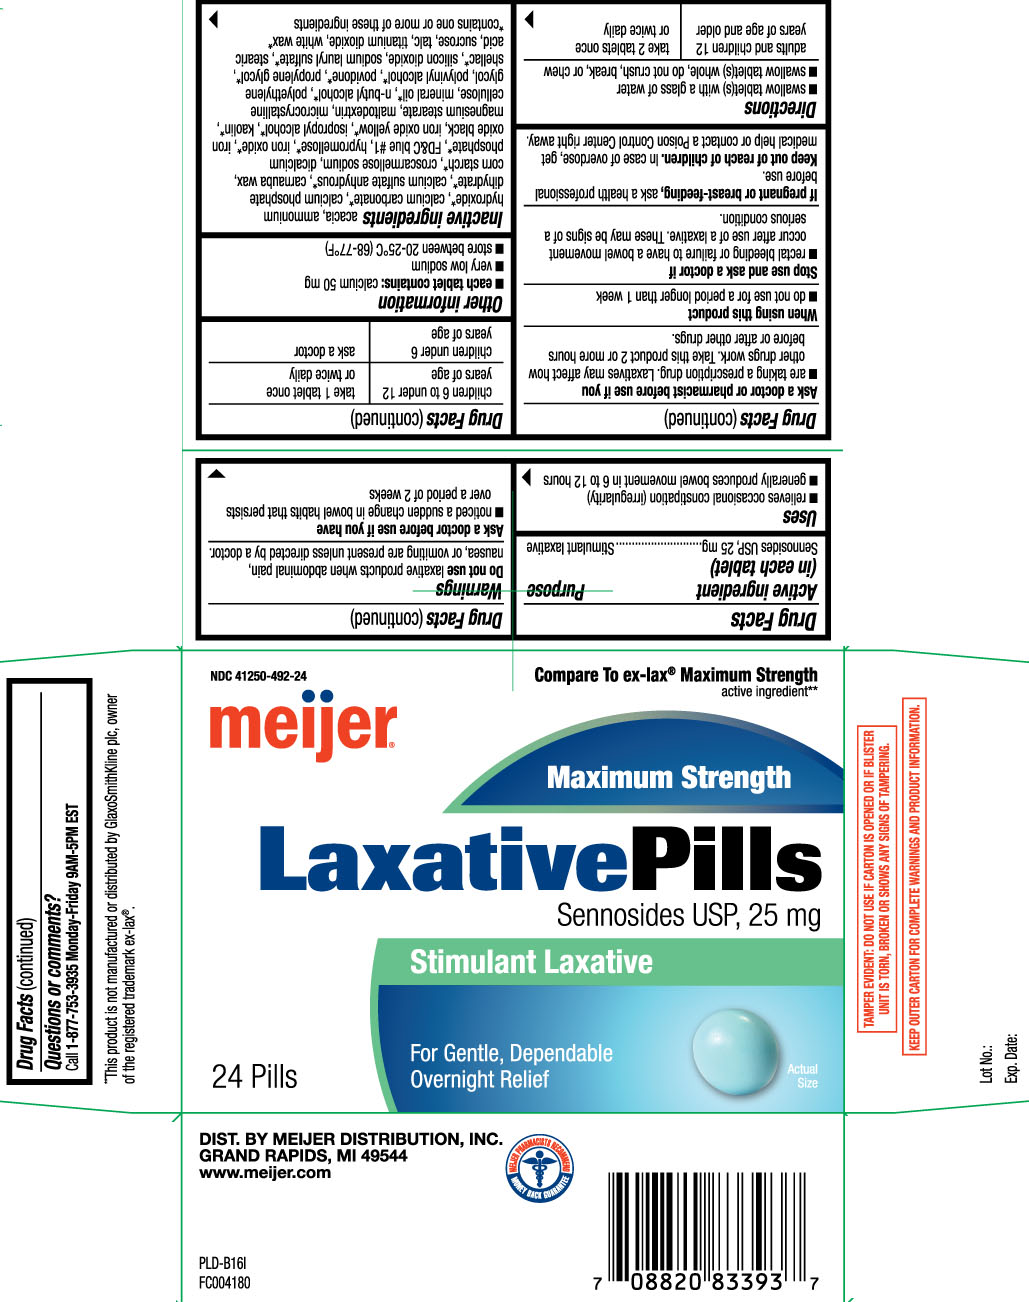 Sennosides USP, 25 mg